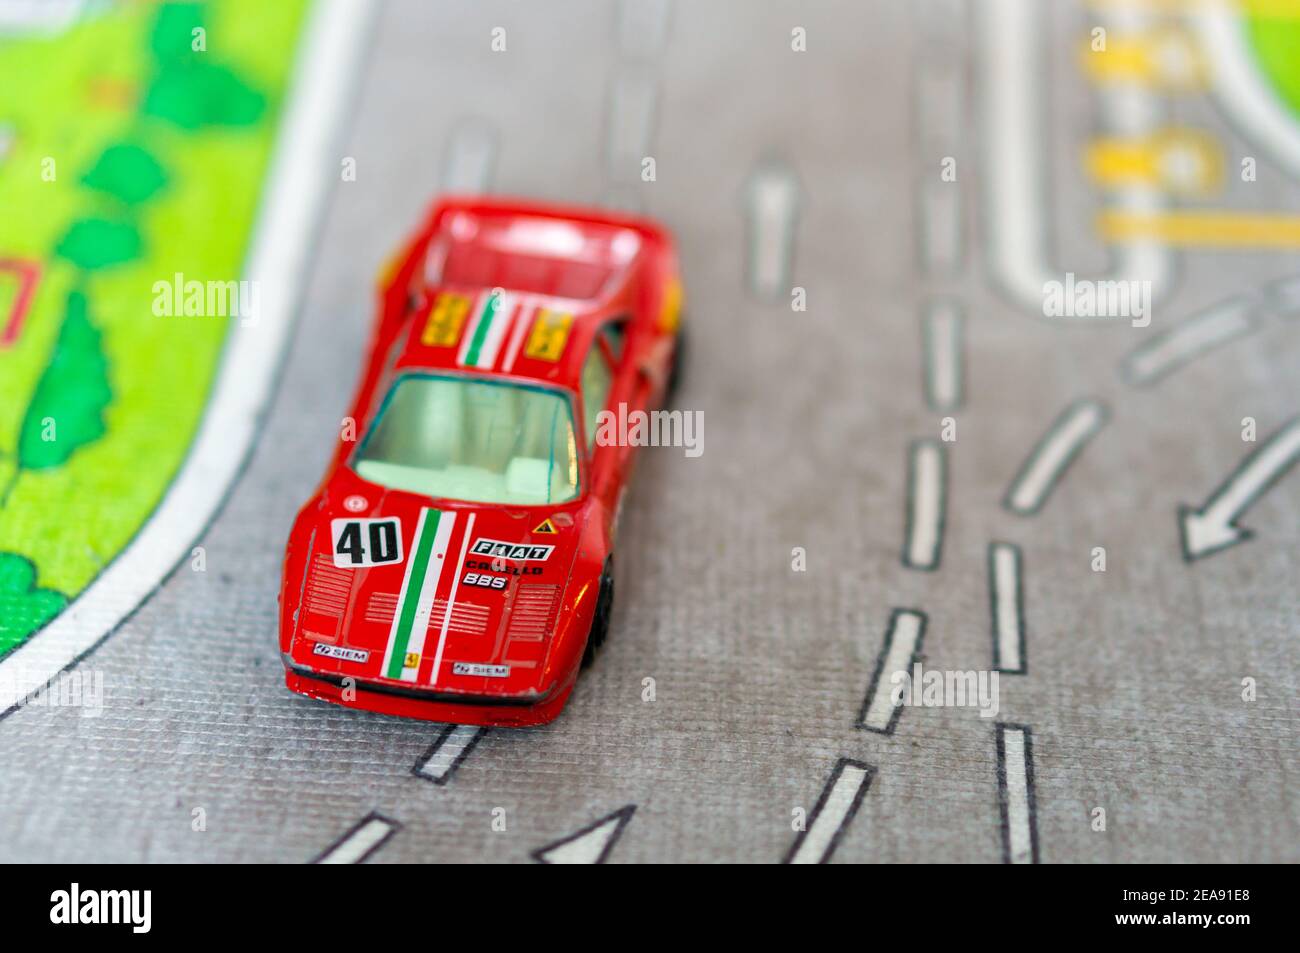 POZNAN, POLAND - Sep 10, 2018: Red toy model Ferrari sport car on a road mat Stock Photo